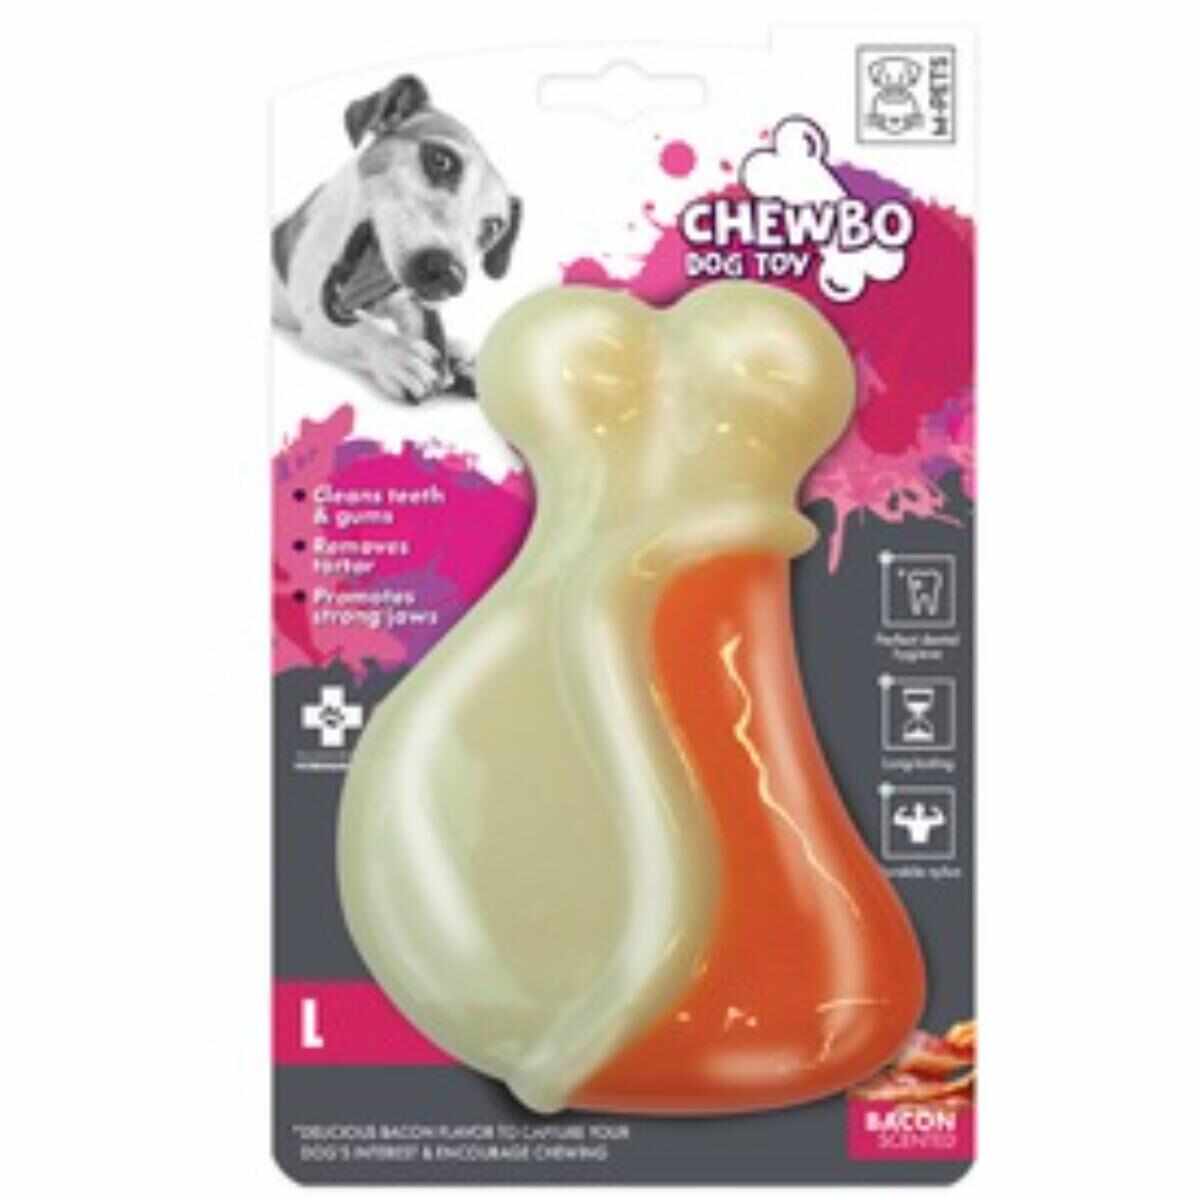 M-PETS Chewbo Leg, jucărie de ros, aromă Bacon, câini, dentiție, cauciuc M-PETS Chewbo Leg, jucărie de ros, aromă Bacon, câini M-L, dentiție, cauciuc, alb și portocaliu, 9.3cm